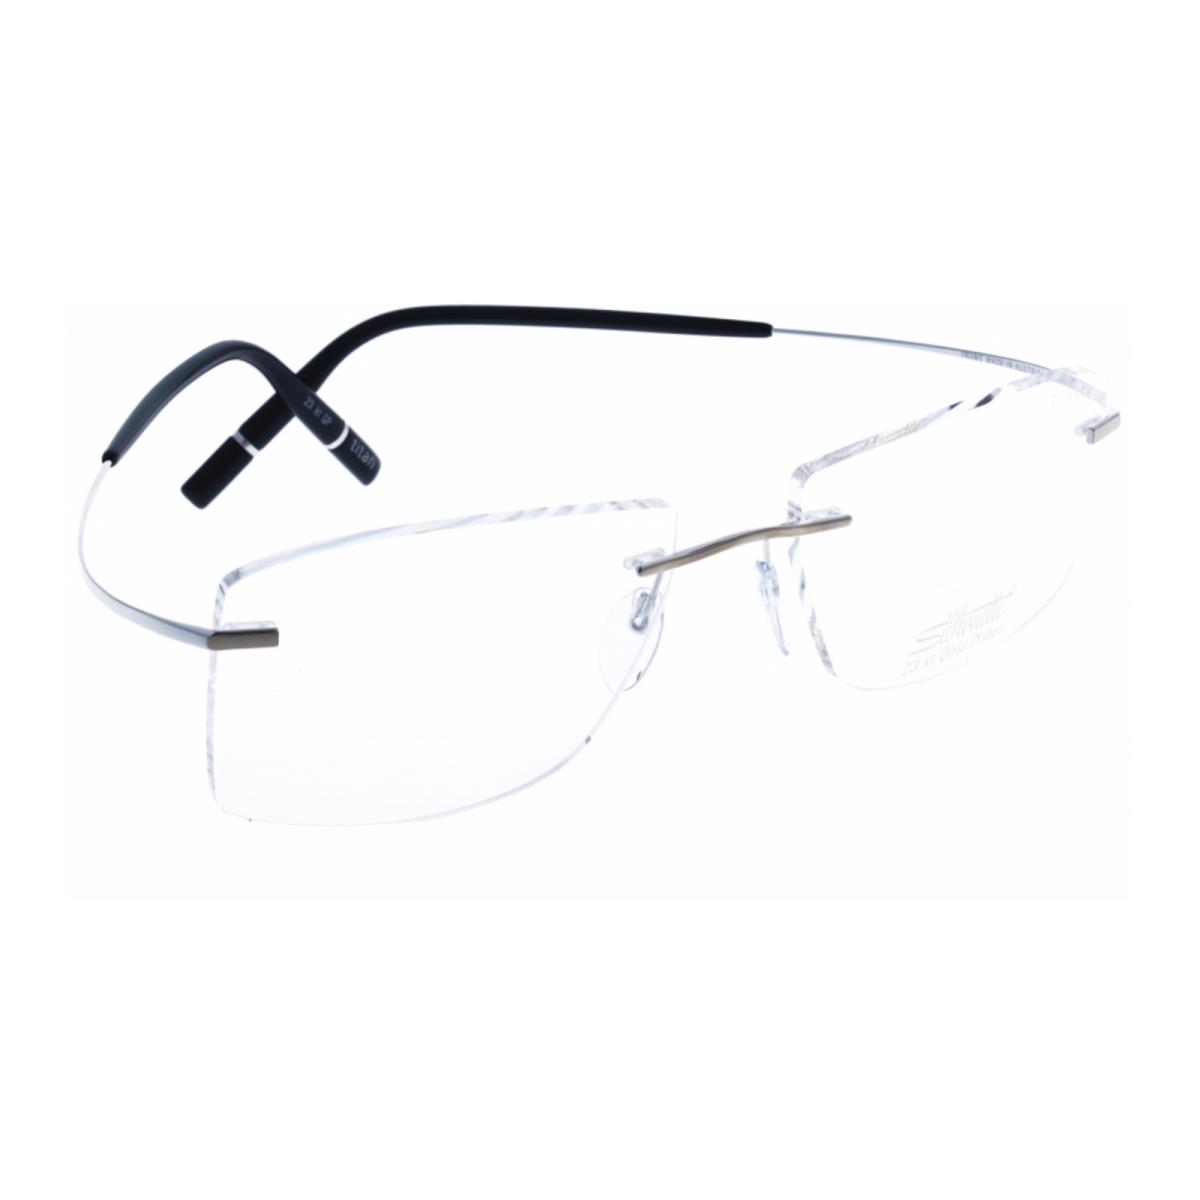 Silhouette Rimless Tma Eyeglasses 5539 IG 8180 56-17 23kt Gold Plated Frames